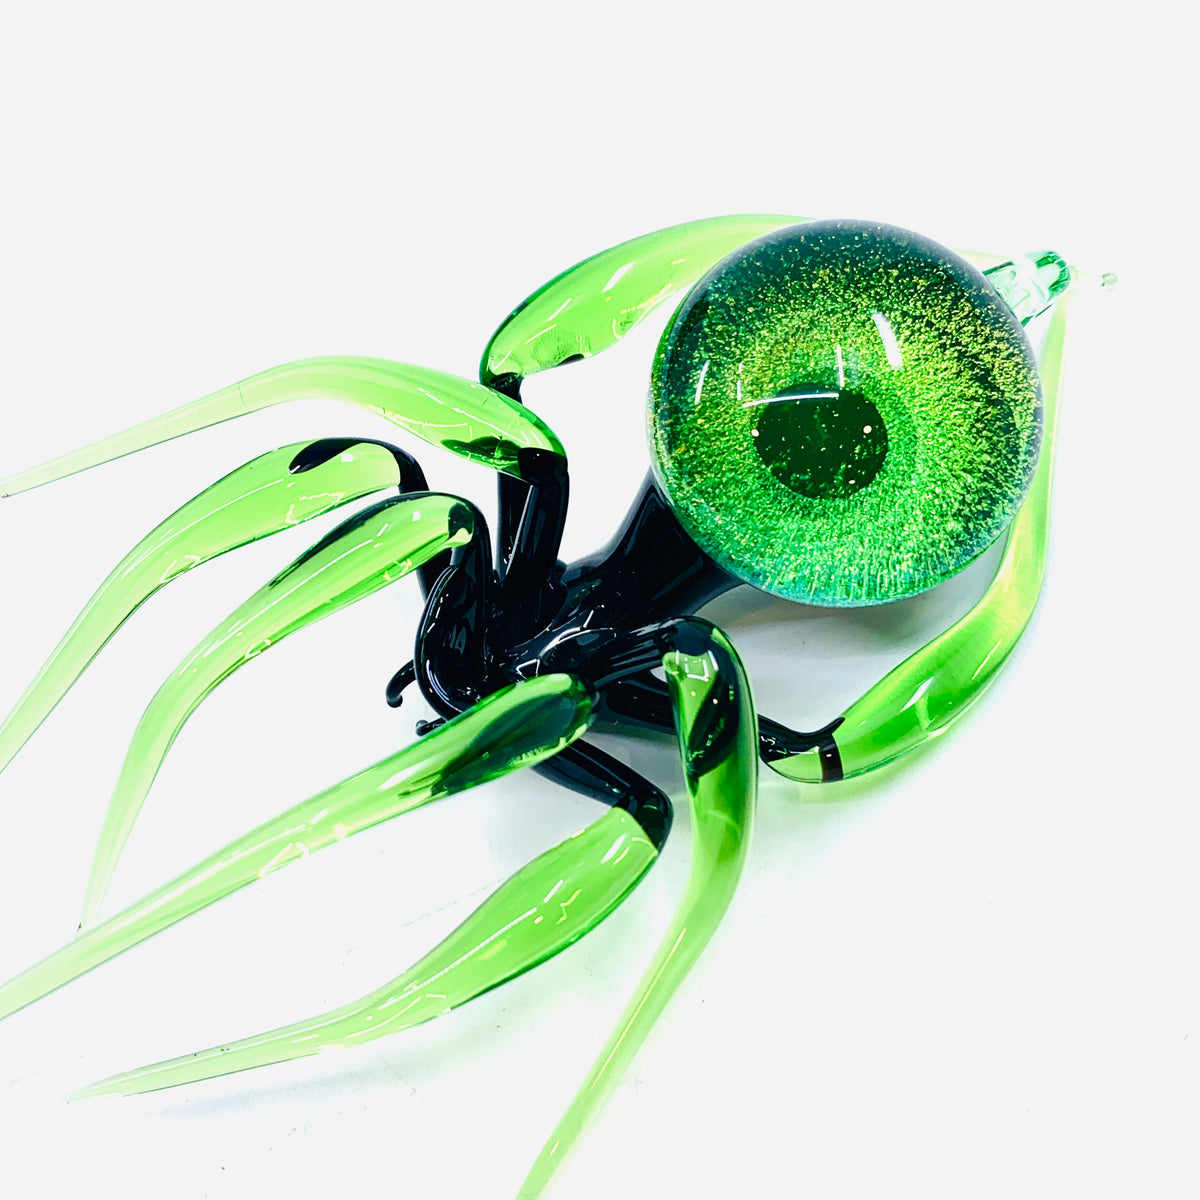 Glass Galaxy Spider Ornament, 23